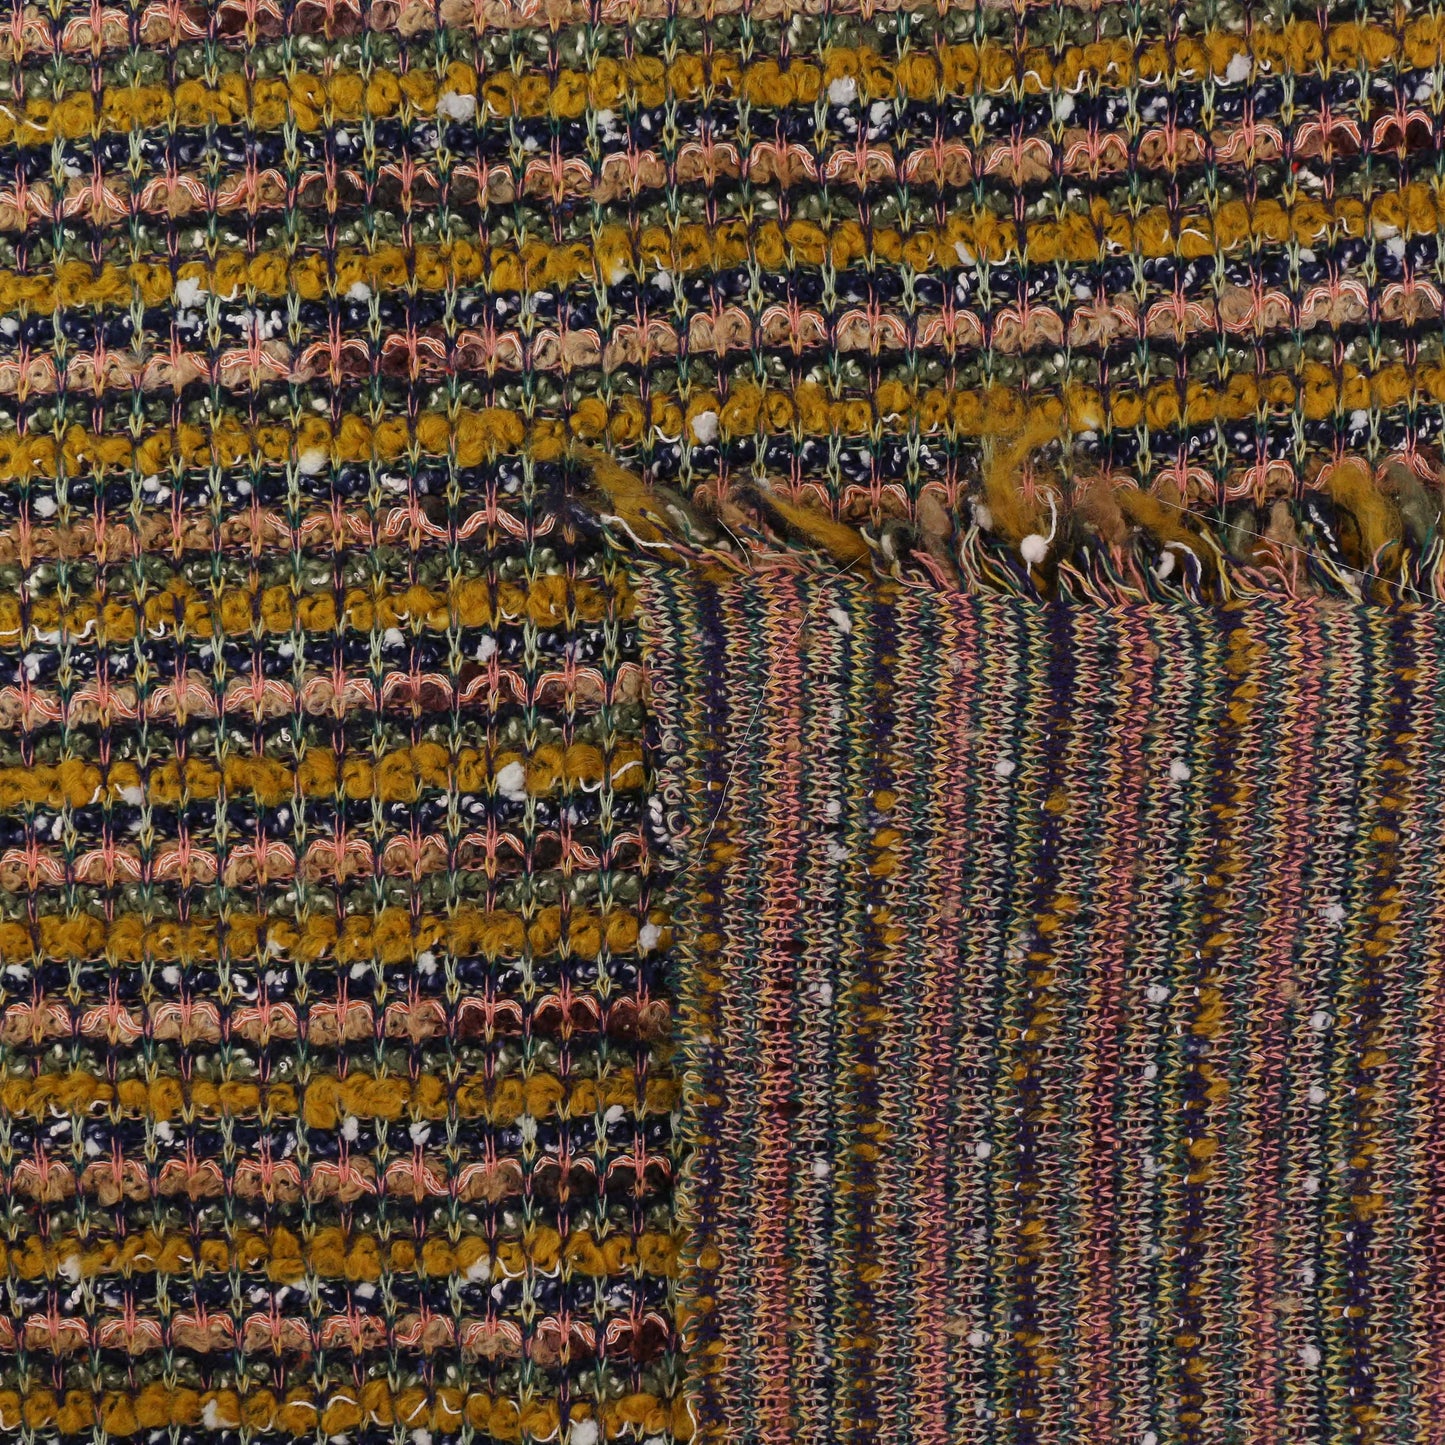 Boucle Jersey Fabric - Plum, red, mustard